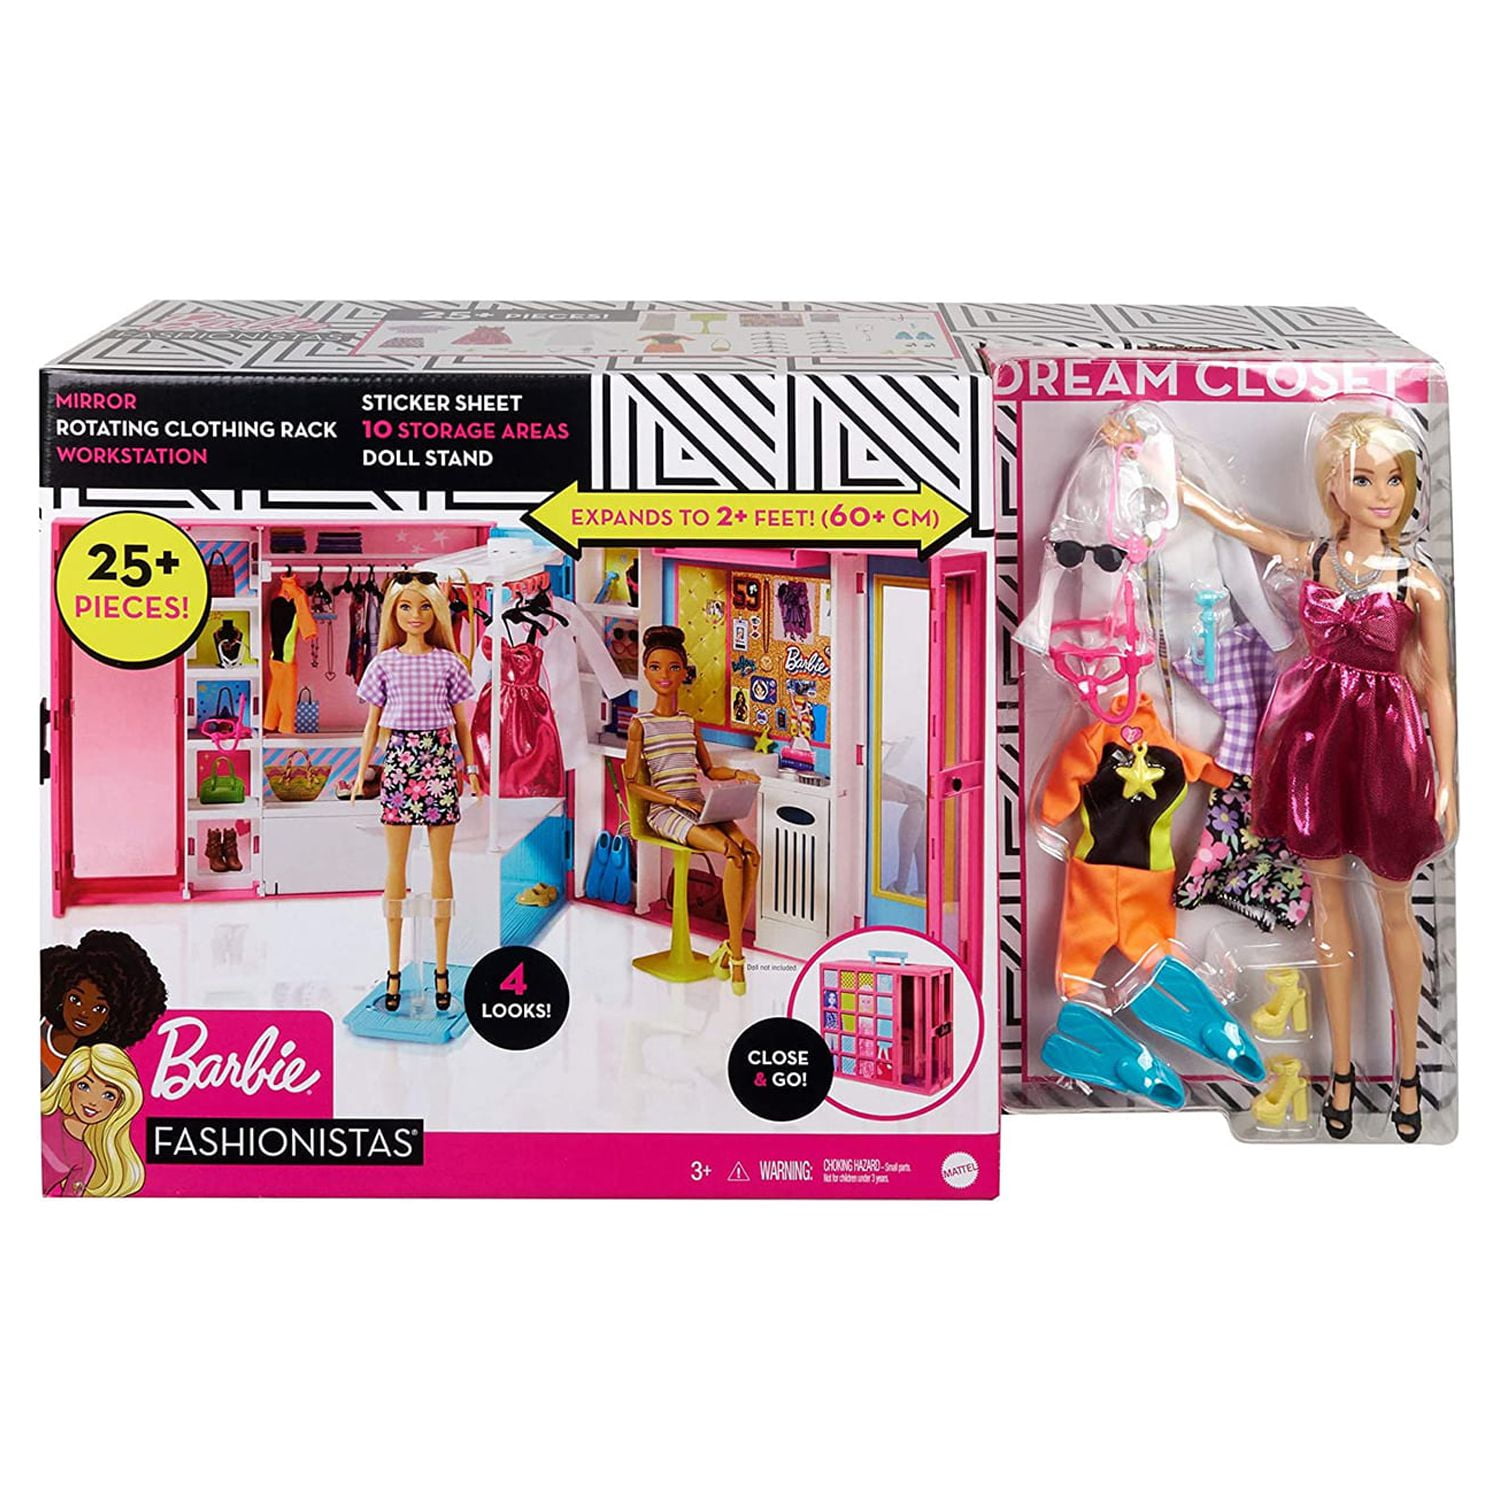 Barbie Dream Closet Fashion Wardrobe Storage with Clothes and Accessories,  Pink, 1 Piece - Ralphs